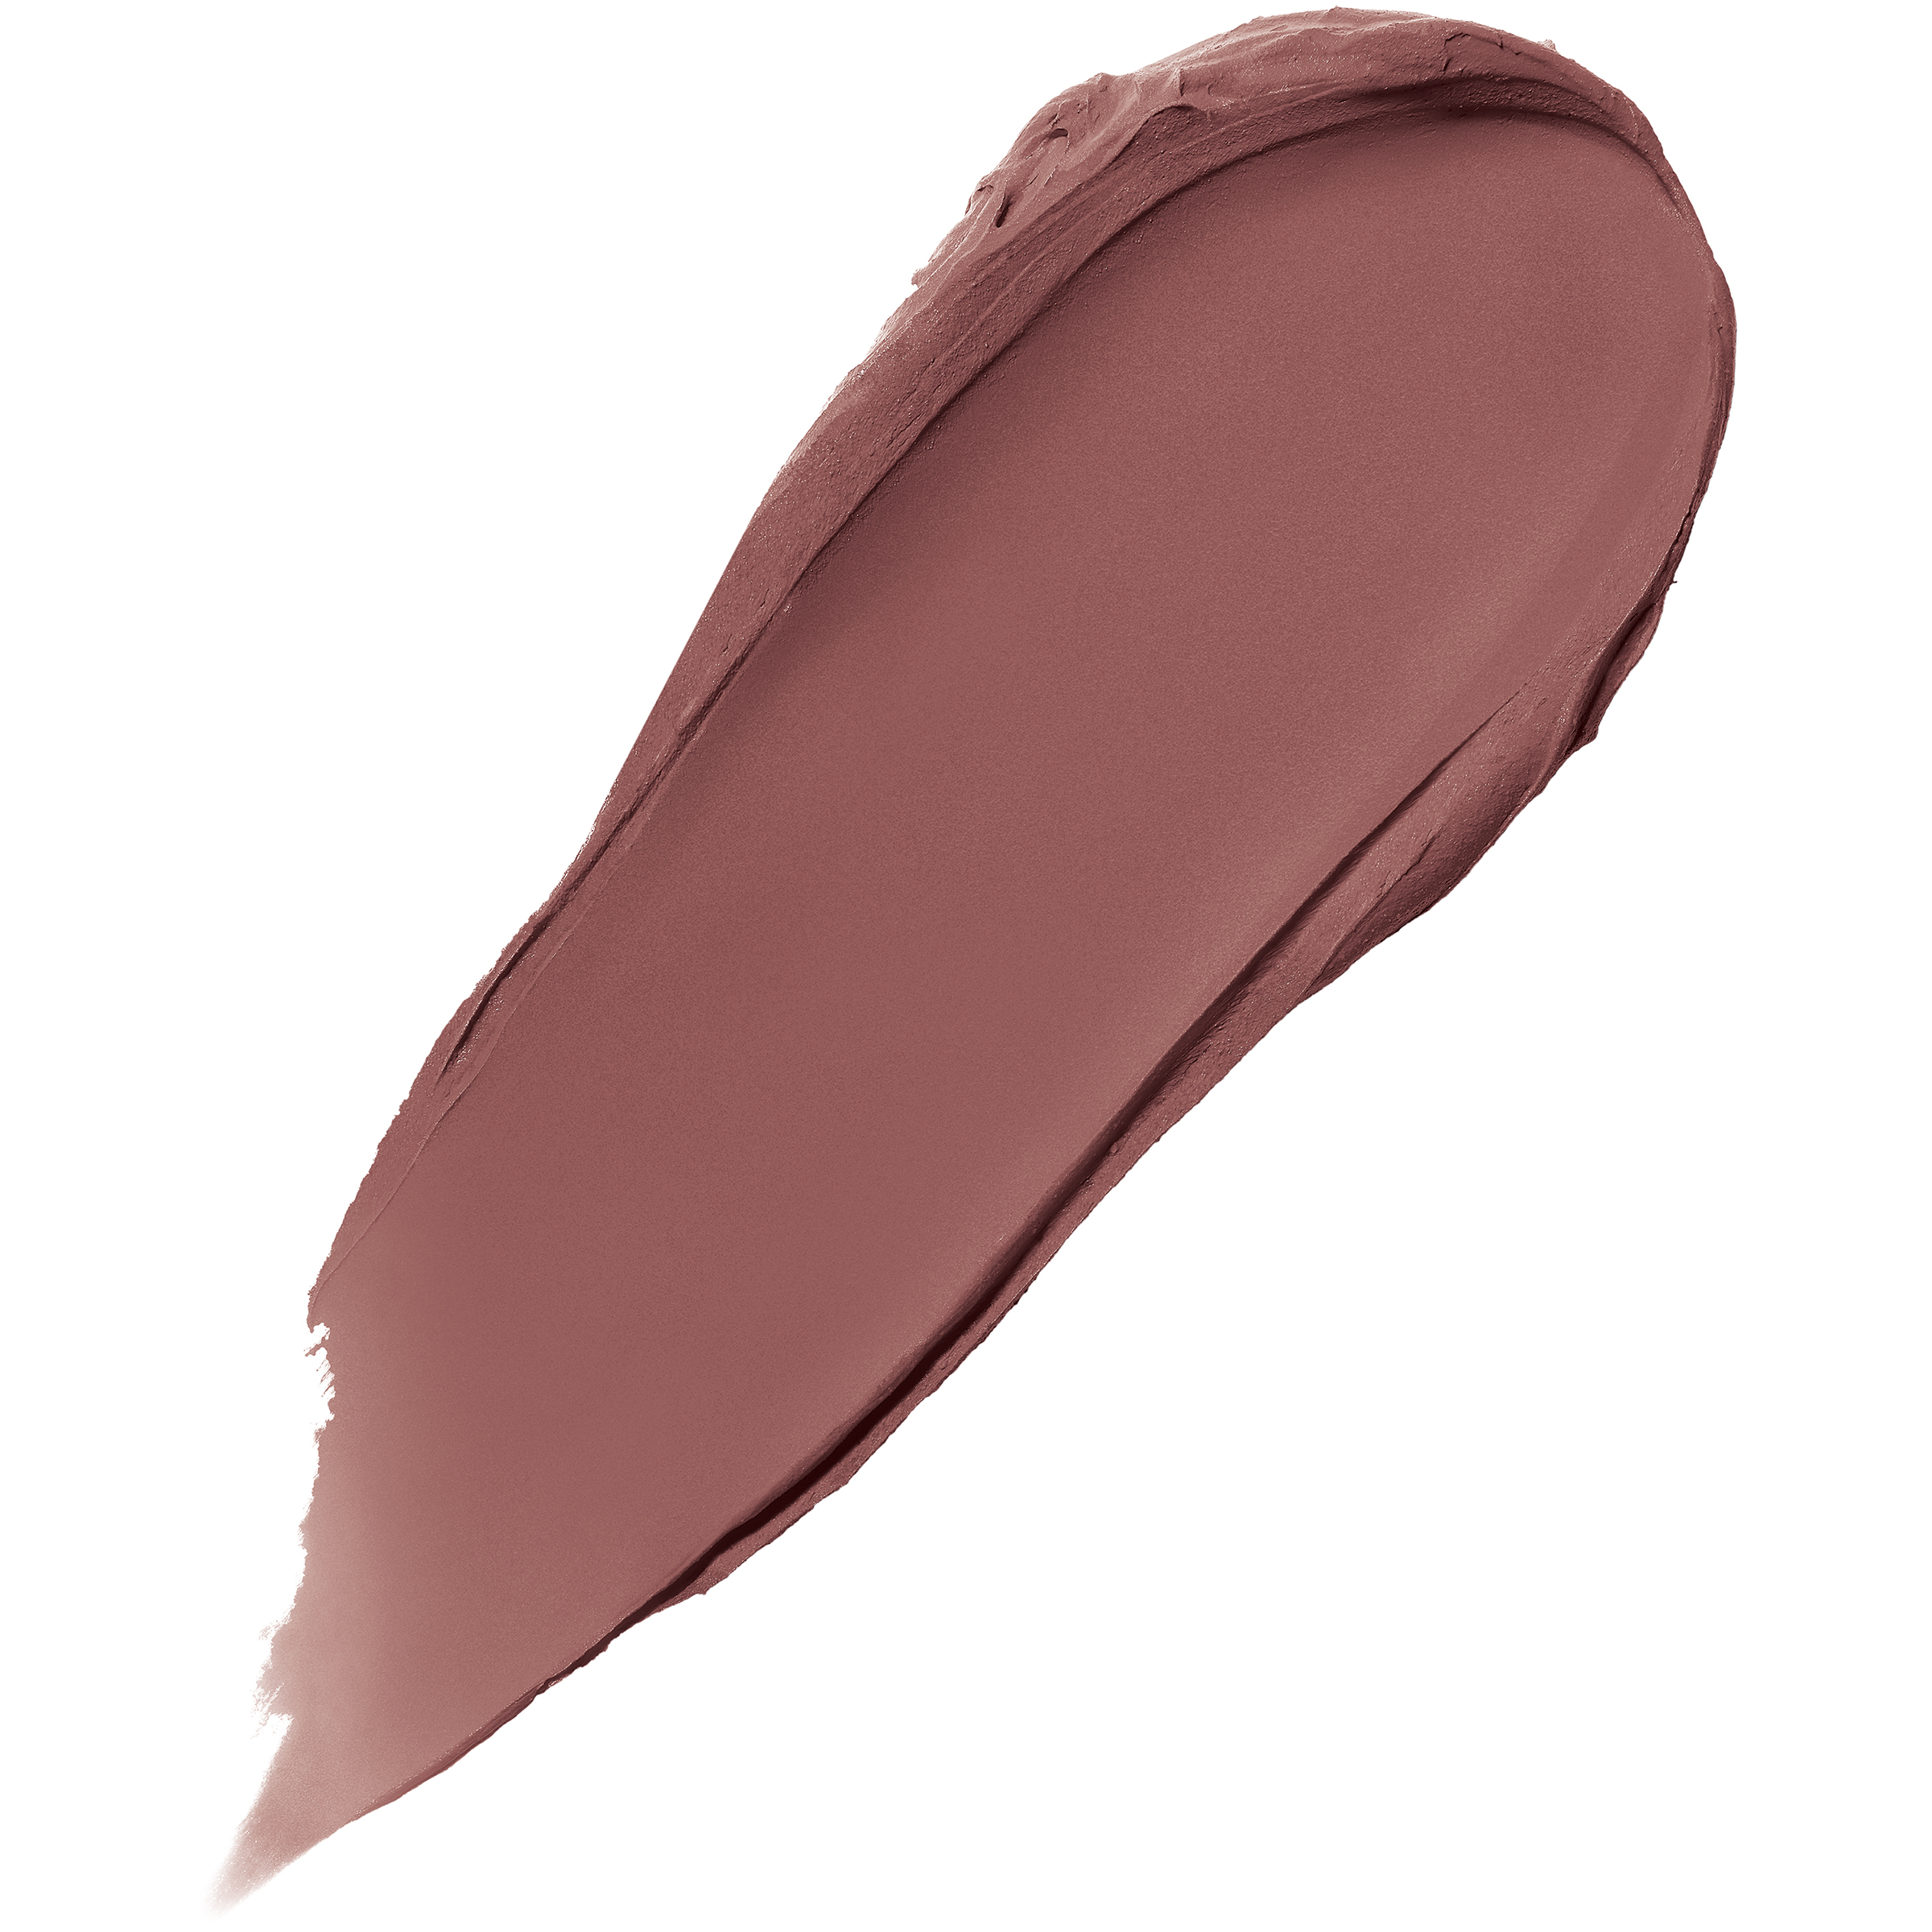 L'Oreal Paris Colour Riche Ultra Matte Highly Pigmented Nude Lipstick, Bold Mauve, 0.13 oz. - image 2 of 5